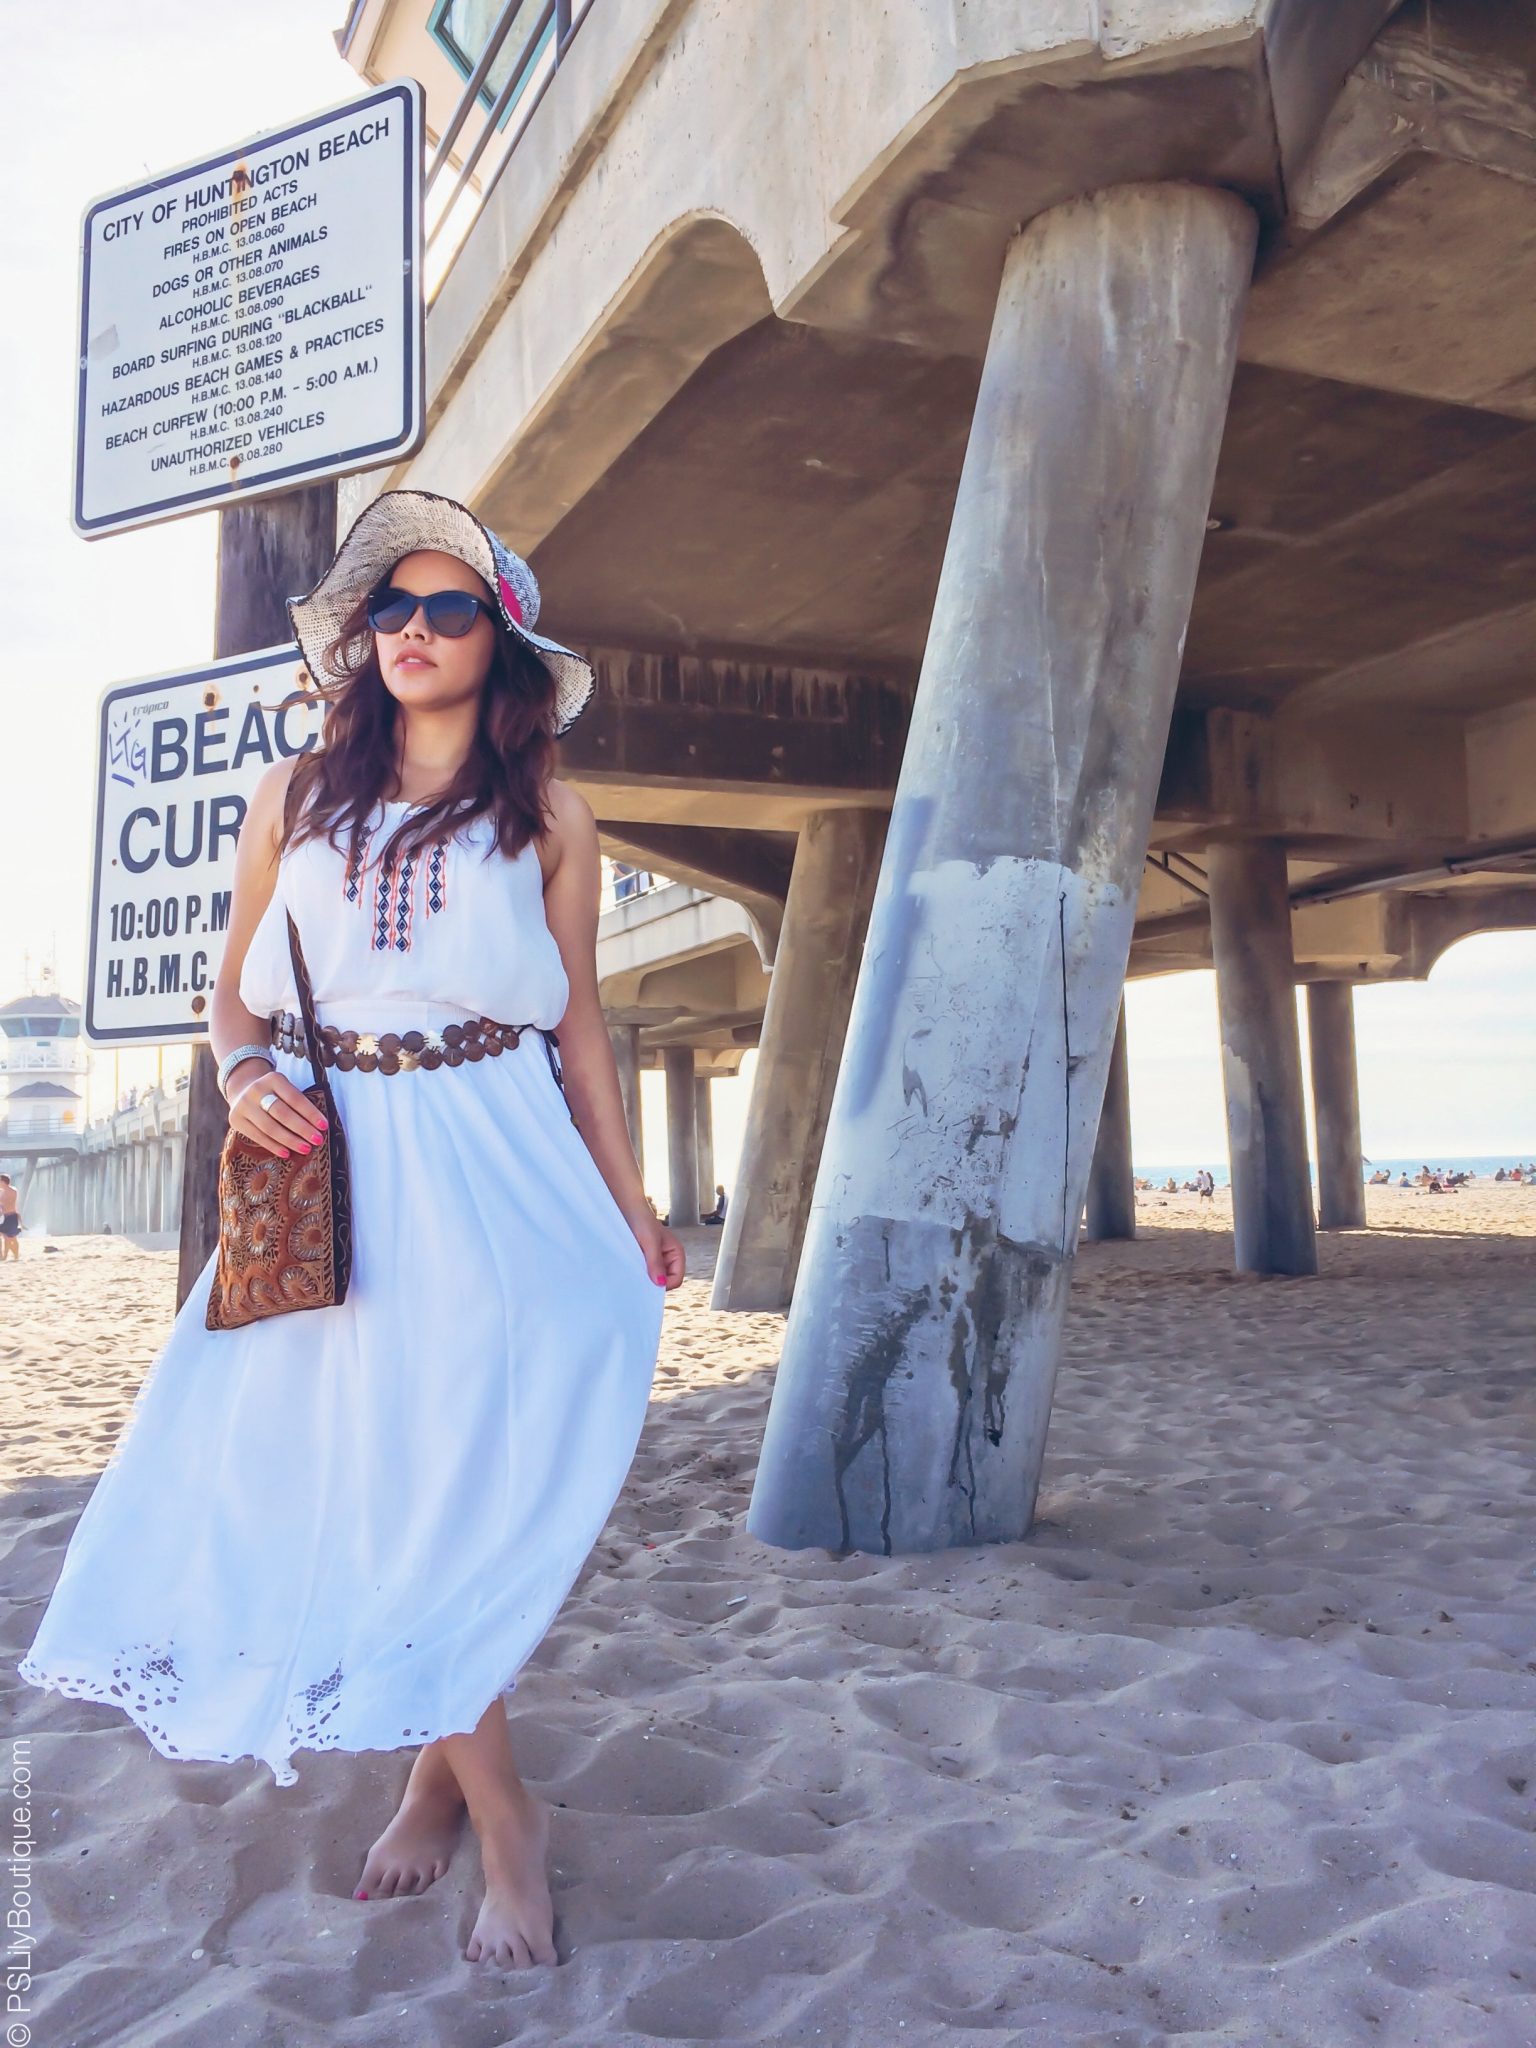 instagram-pslilyboutique-los-angeles-fashion-blogger-huntington-beach-california-jane-ashley-white-midi-skirt-10-25-2015